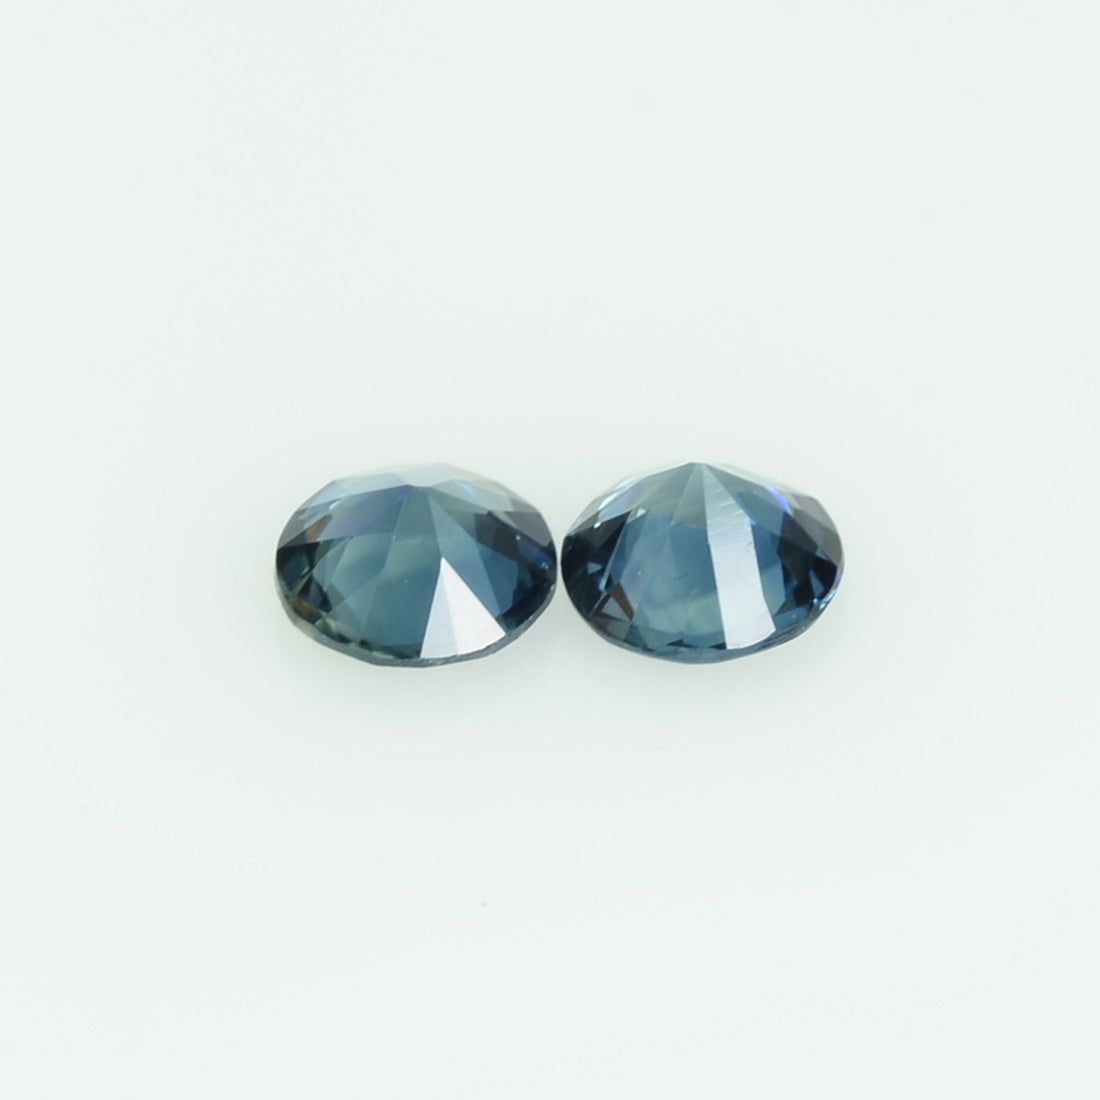 4.0 mm Natural Teal Blue Green Sapphire Loose Gemstone Round Cut